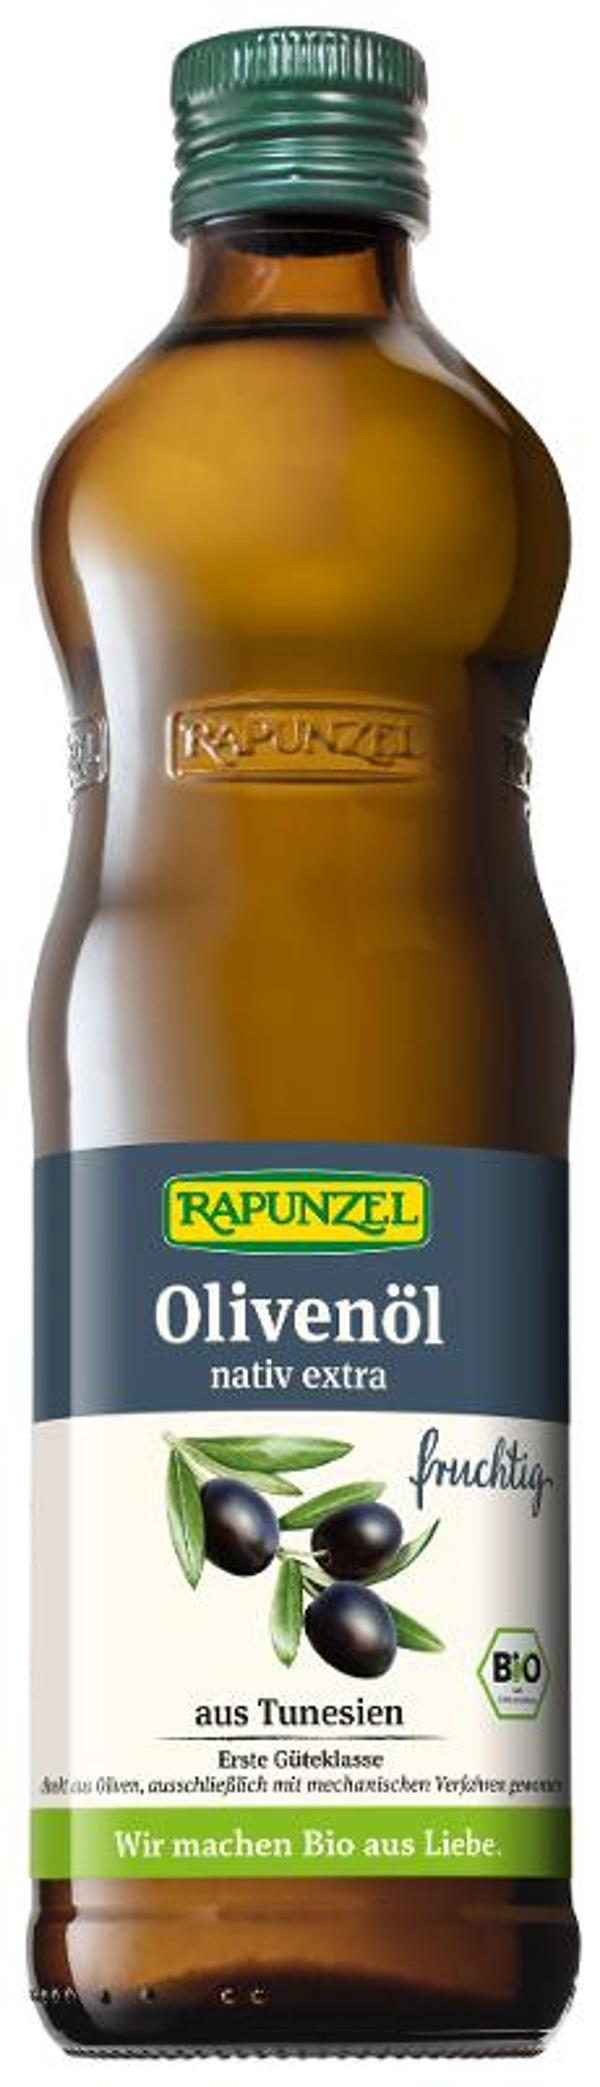 Produktfoto zu Olivenöl fruchtig  0,5 l